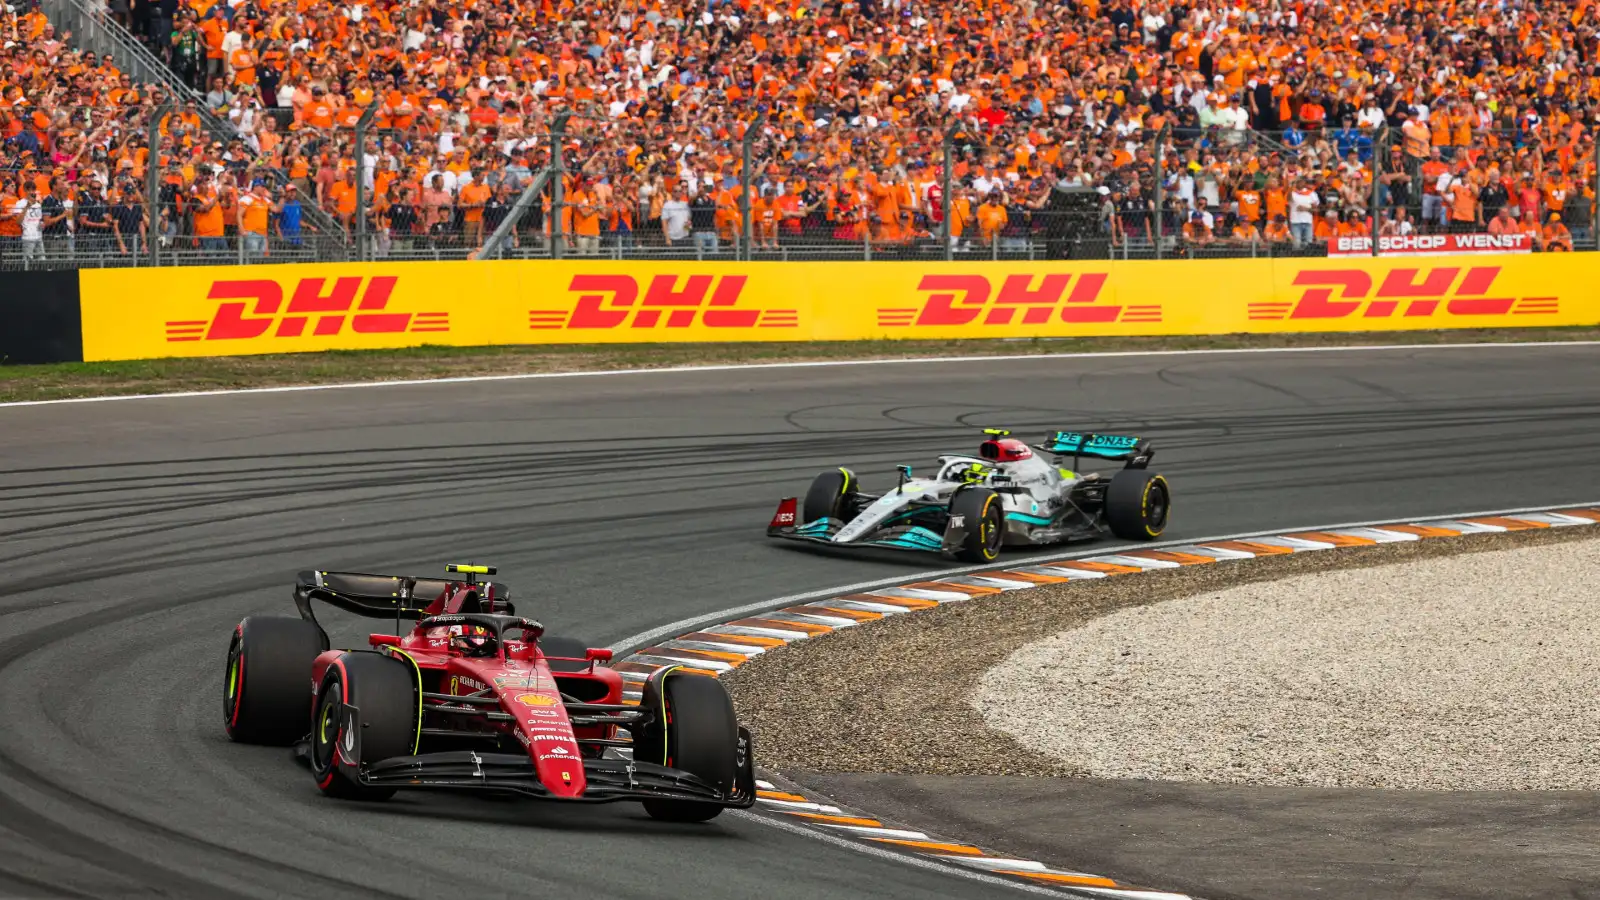 Ferrari driver Carlos Sainz races Mercedes driver Lewis Hamilton at the Dutch Grand Prix. Zandvoort, September 2022.